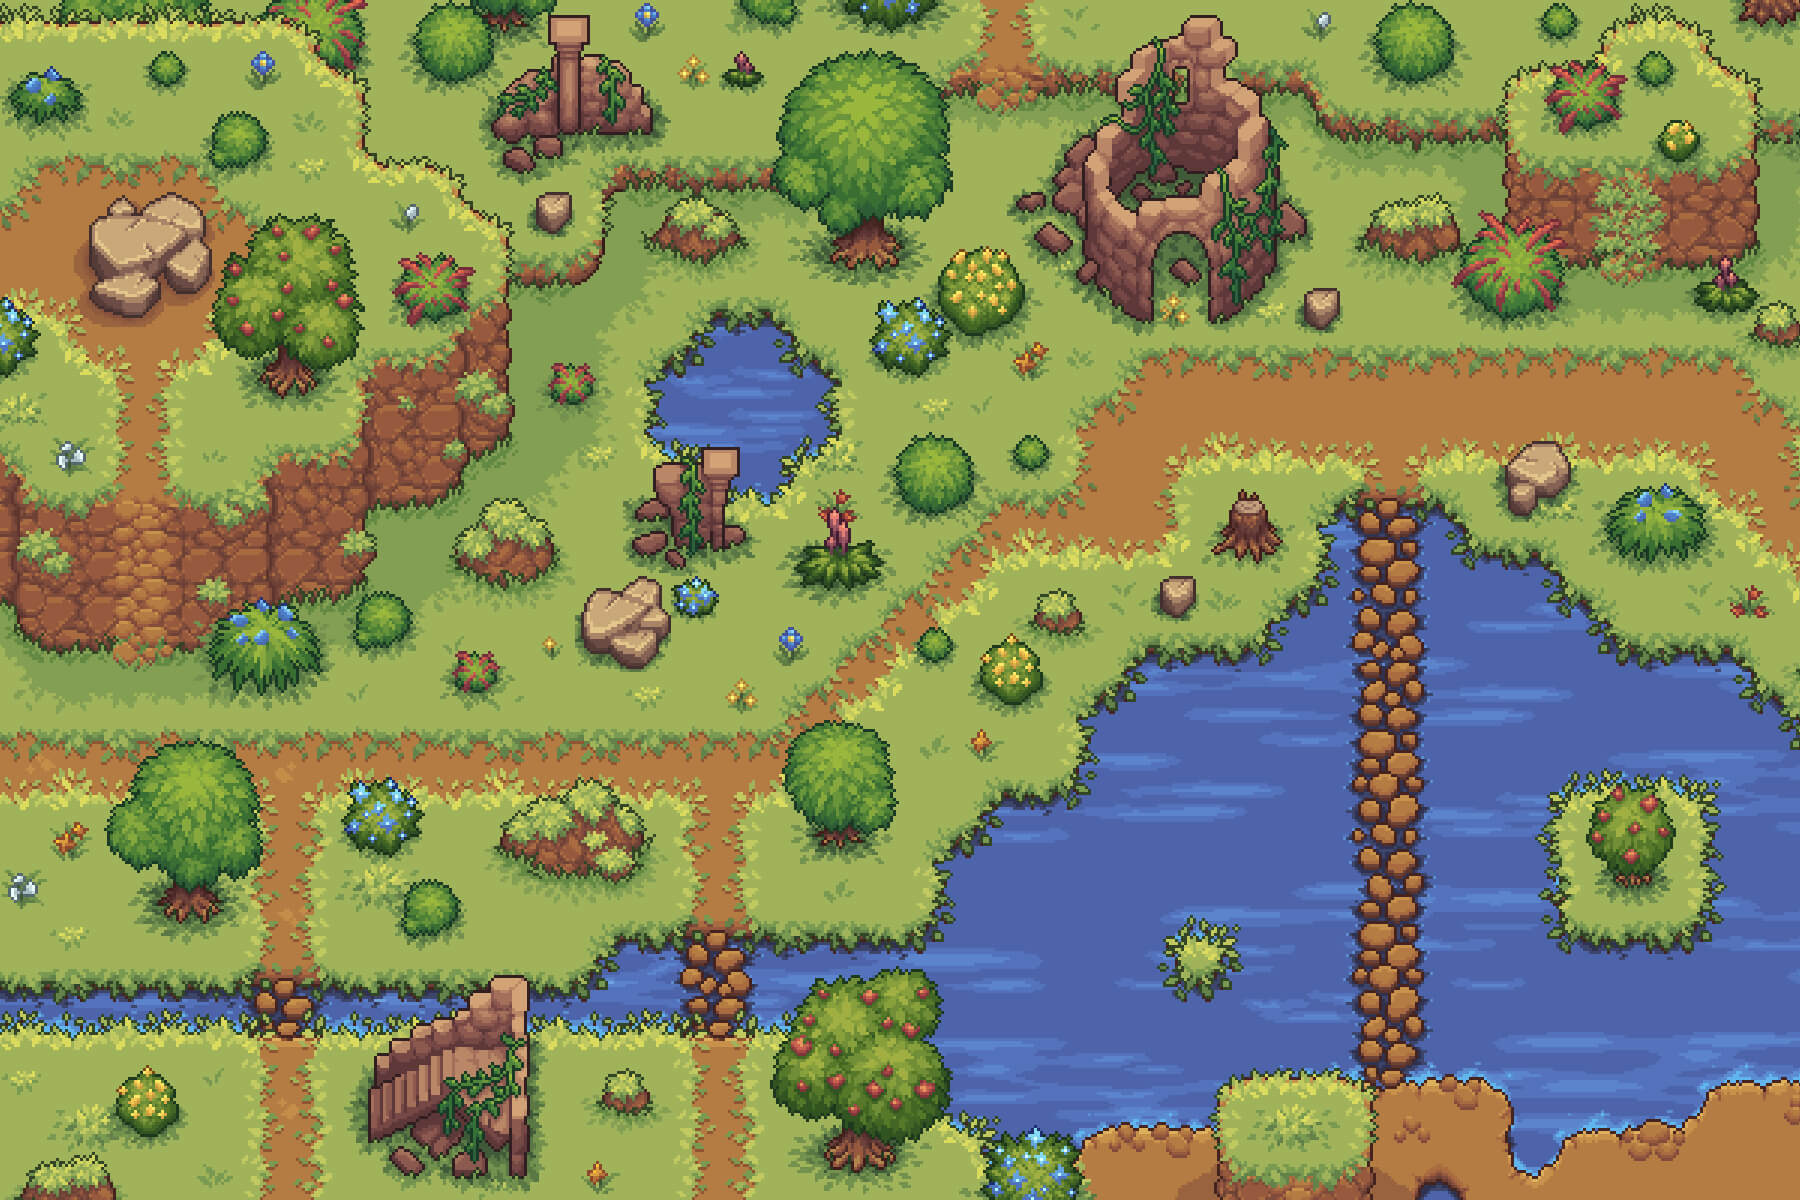 Grassland Top Down Tileset Pixel Art by 2D Game Assets on Dribbble